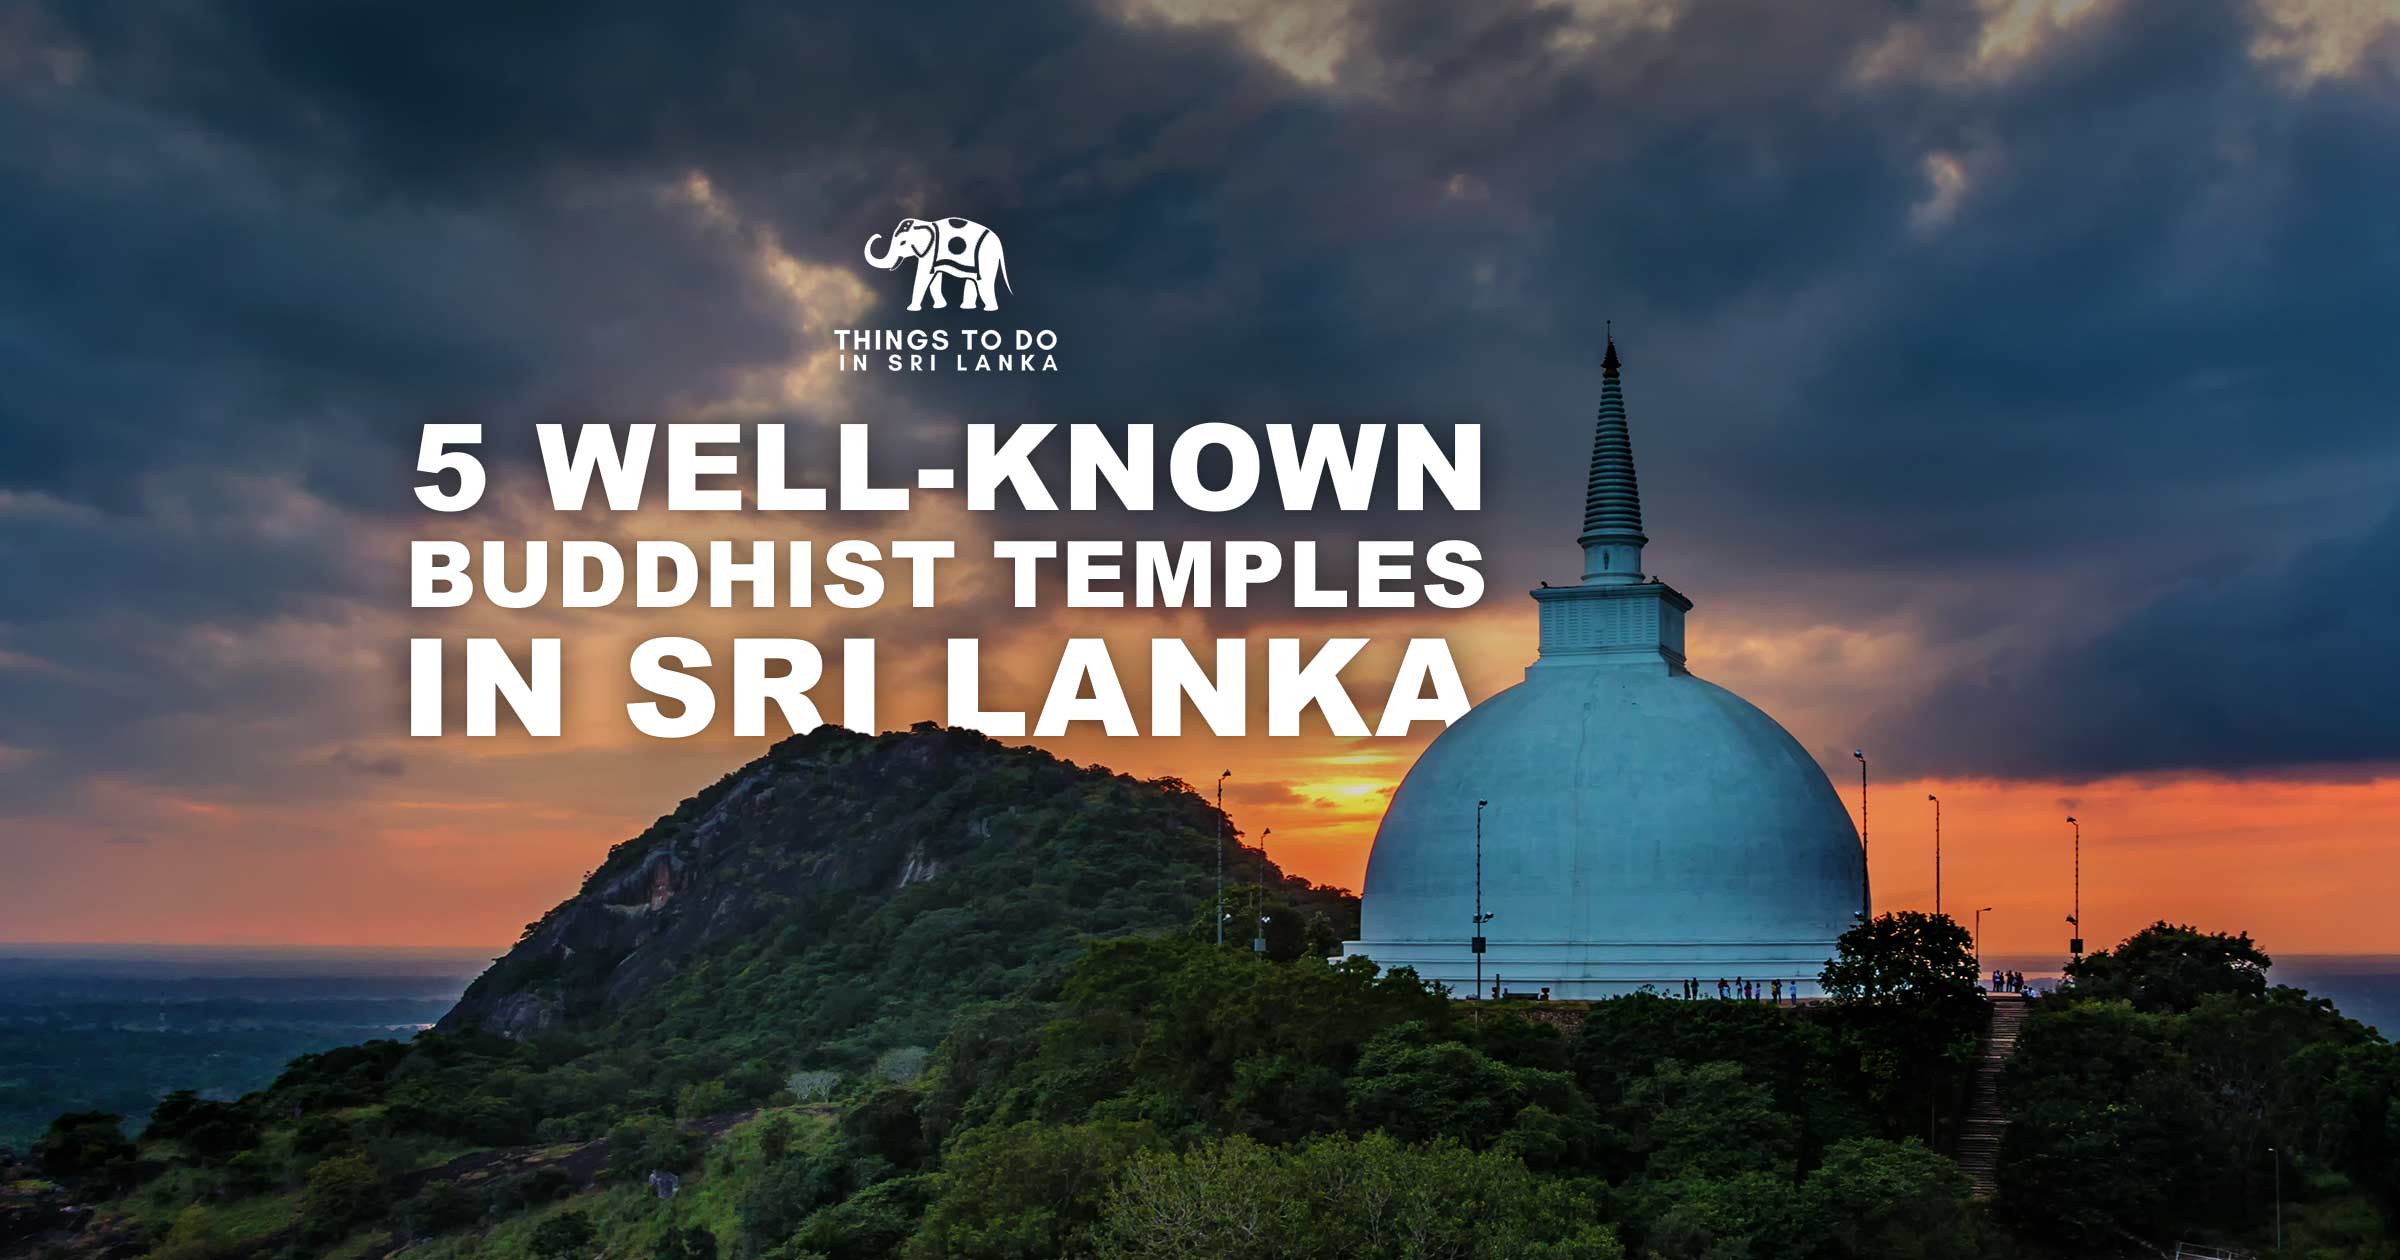 5 well-known Buddhist temples in Sri Lanka